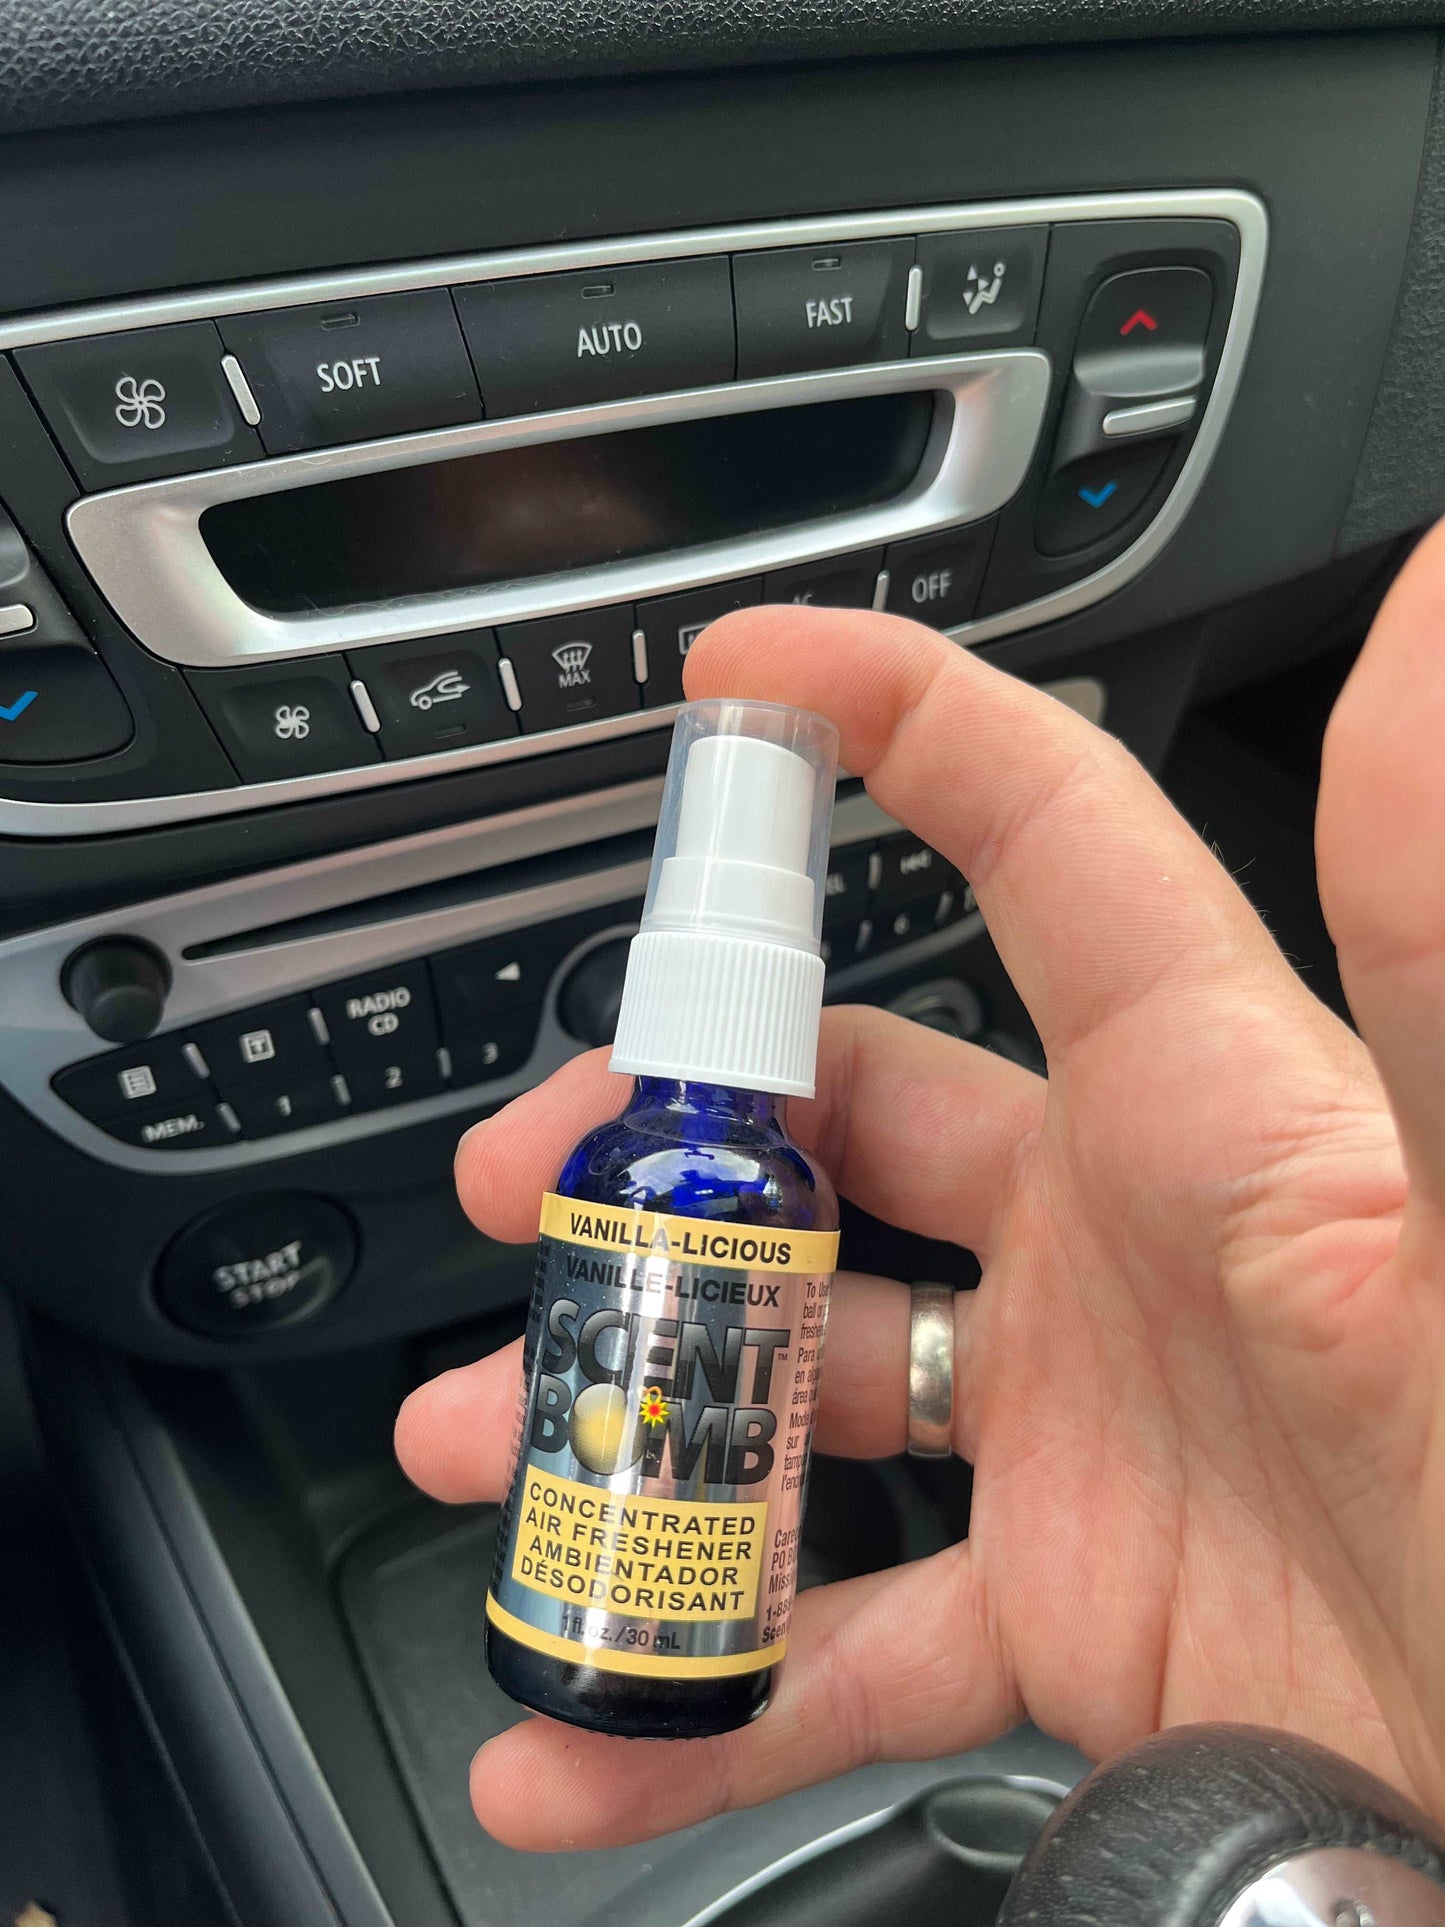 Scent Bomb Auto Parfum Spray - Vanille Licious